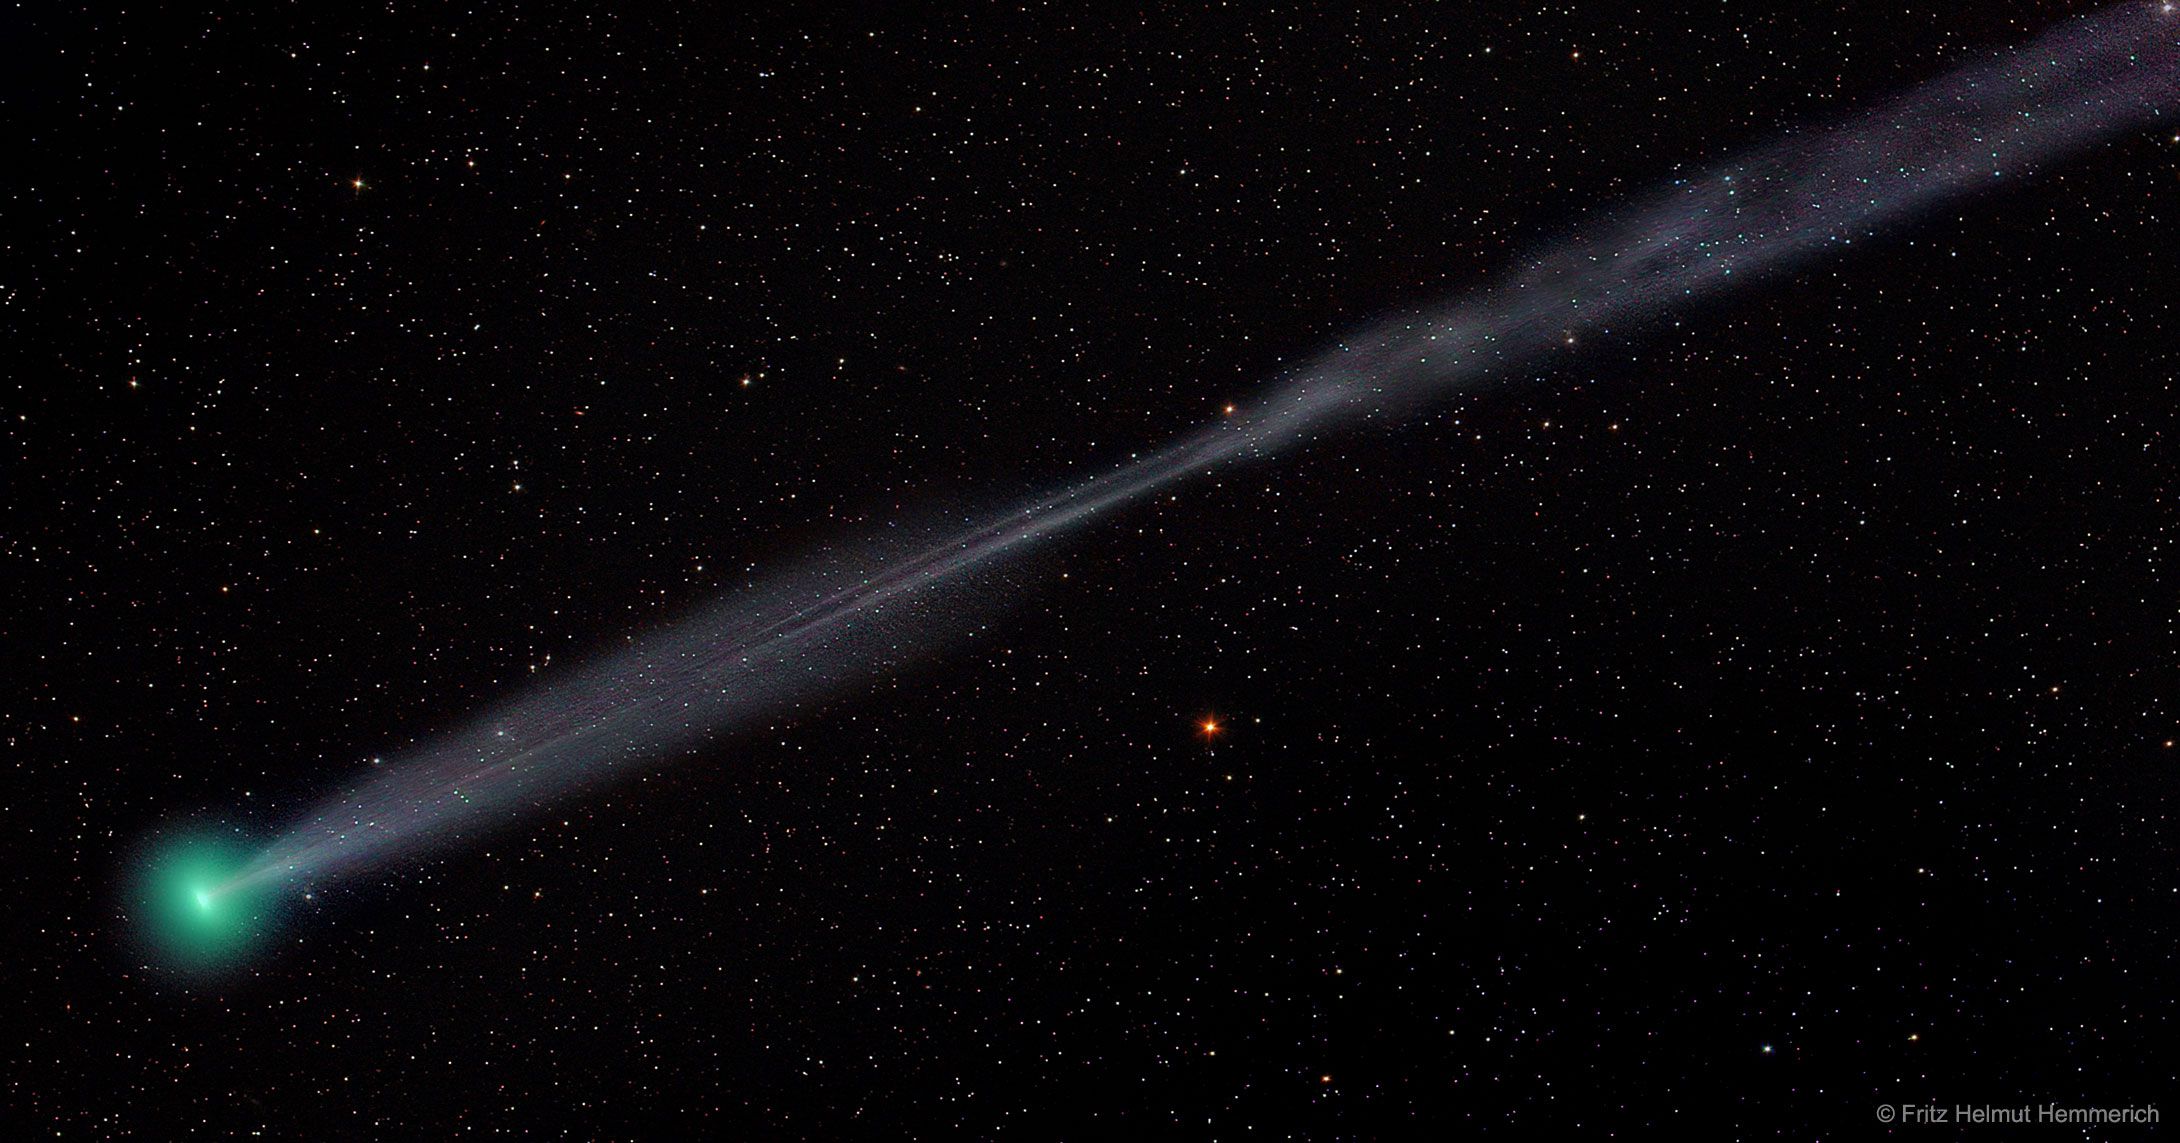  A Split Ion Tail for Comet Lovejoy E4 